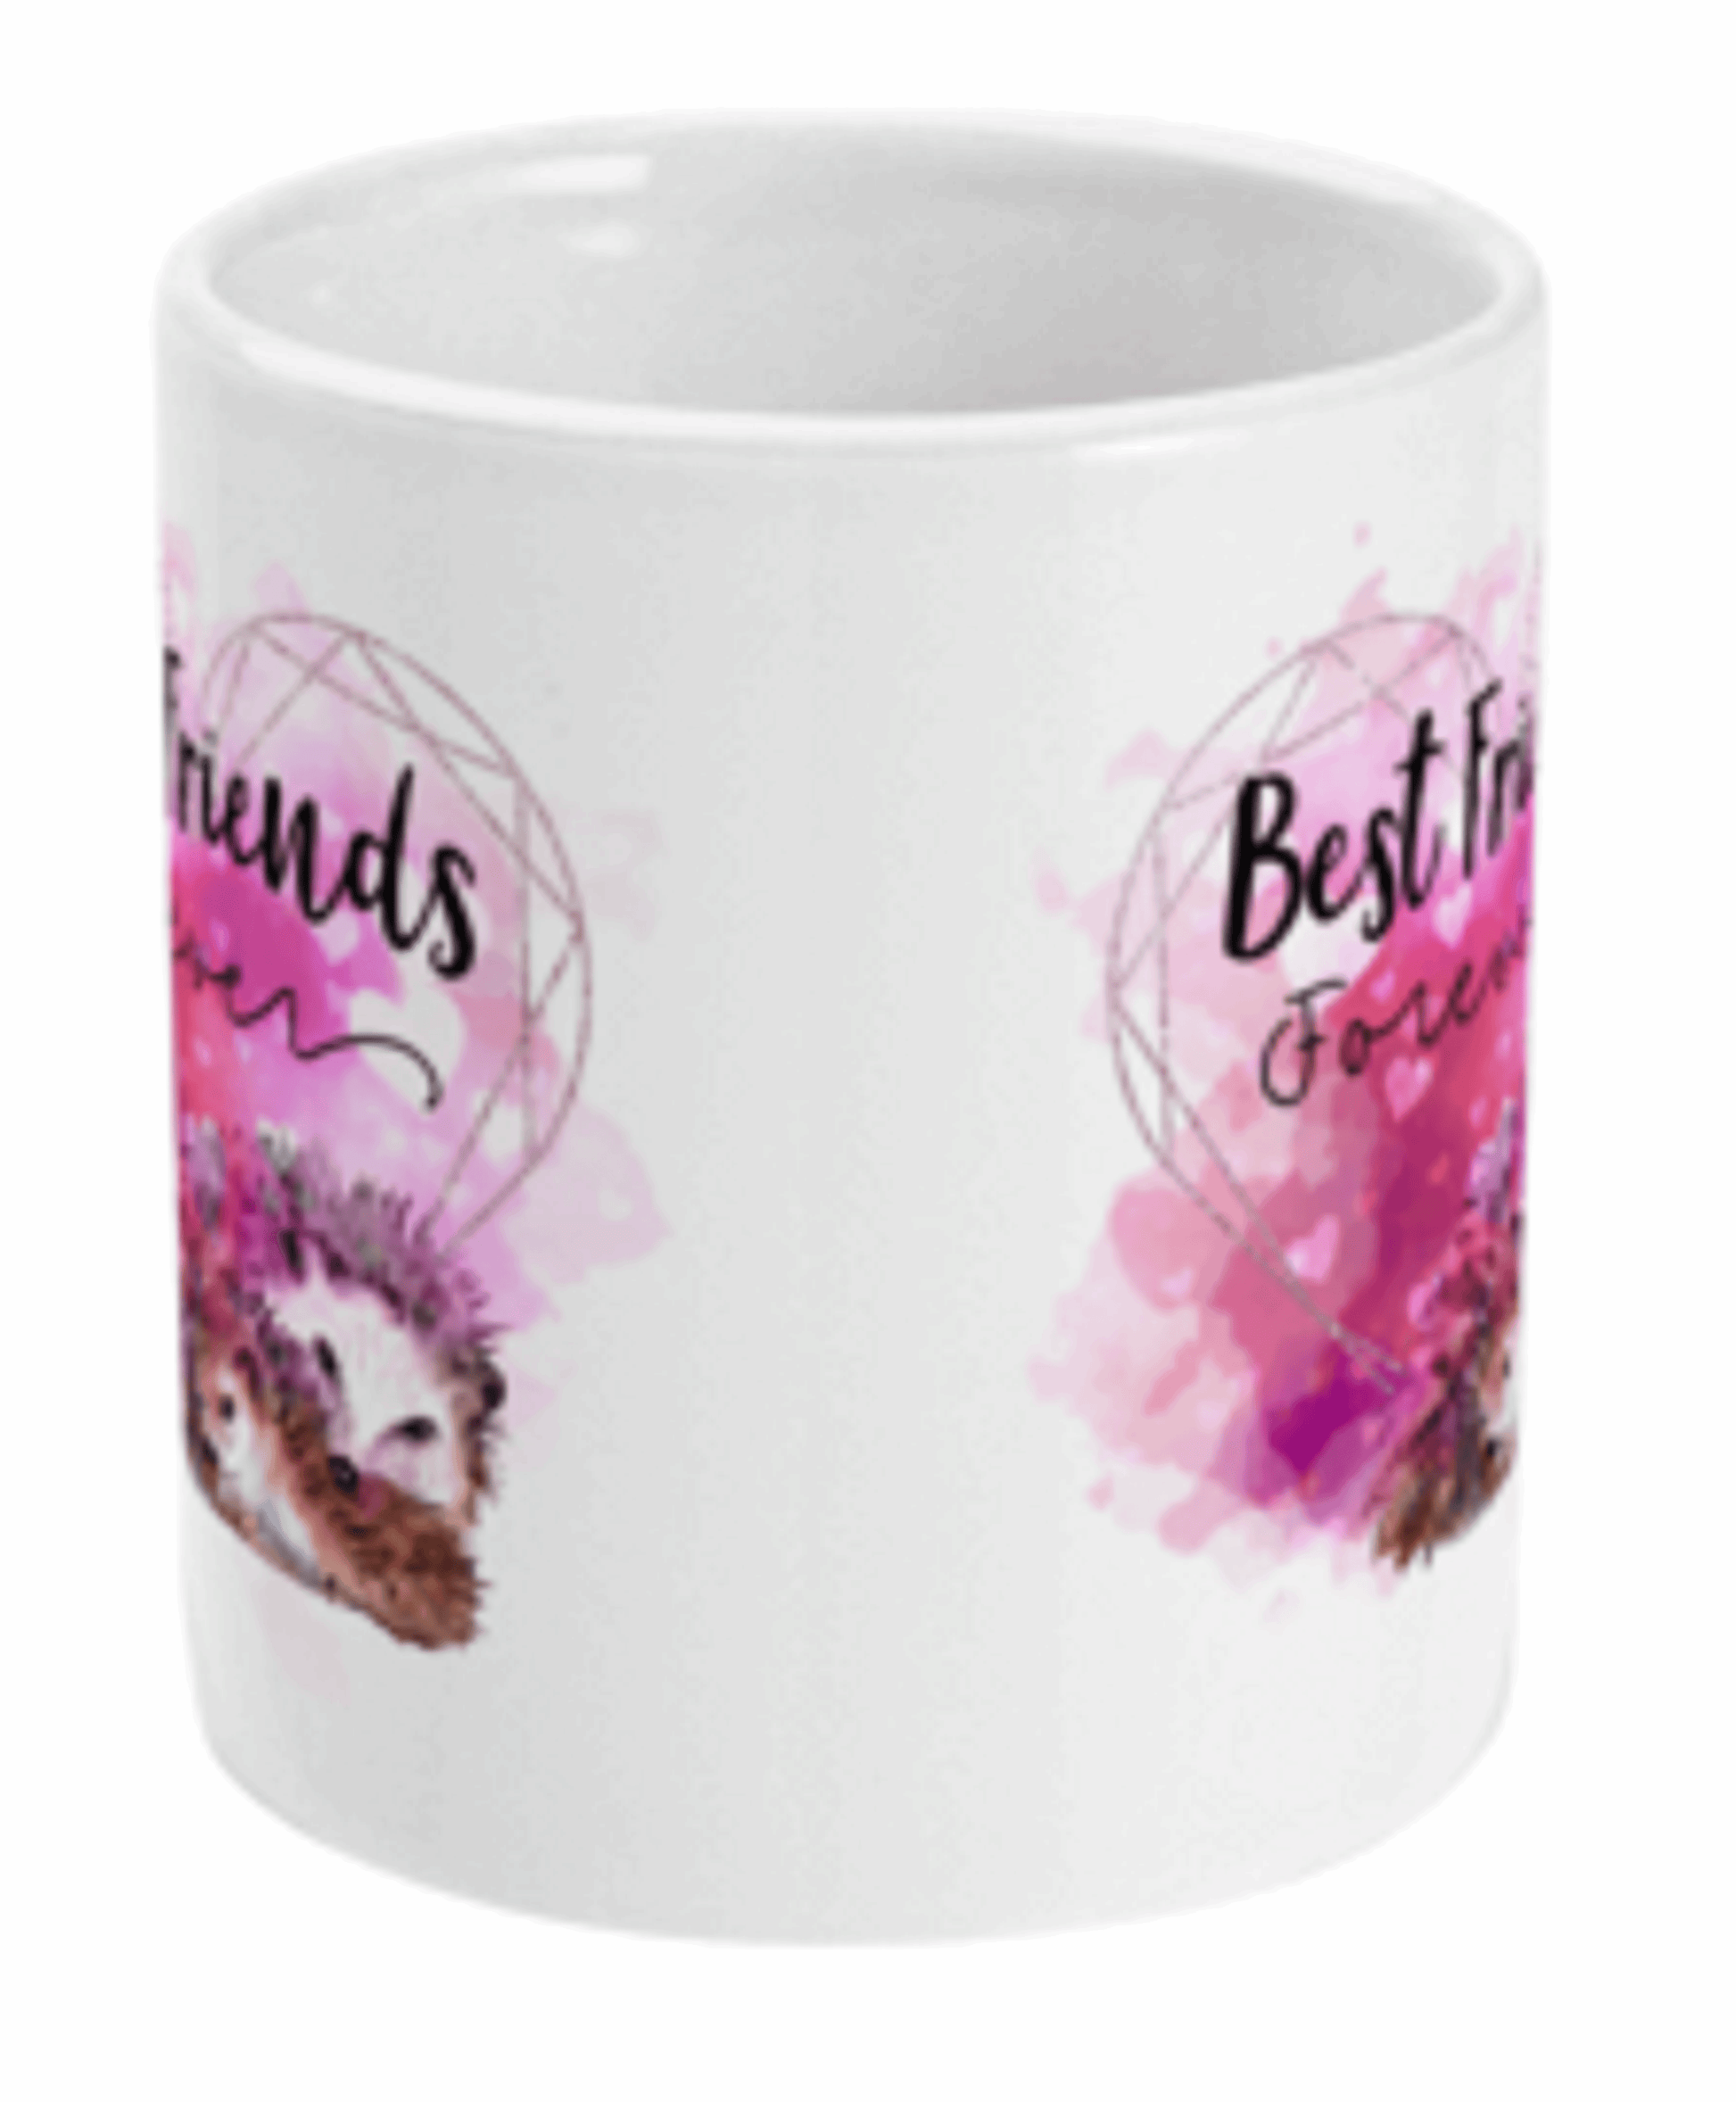  Best Friends Forever Hedgehogs Coffee Mug by Free Spirit Accessories sold by Free Spirit Accessories